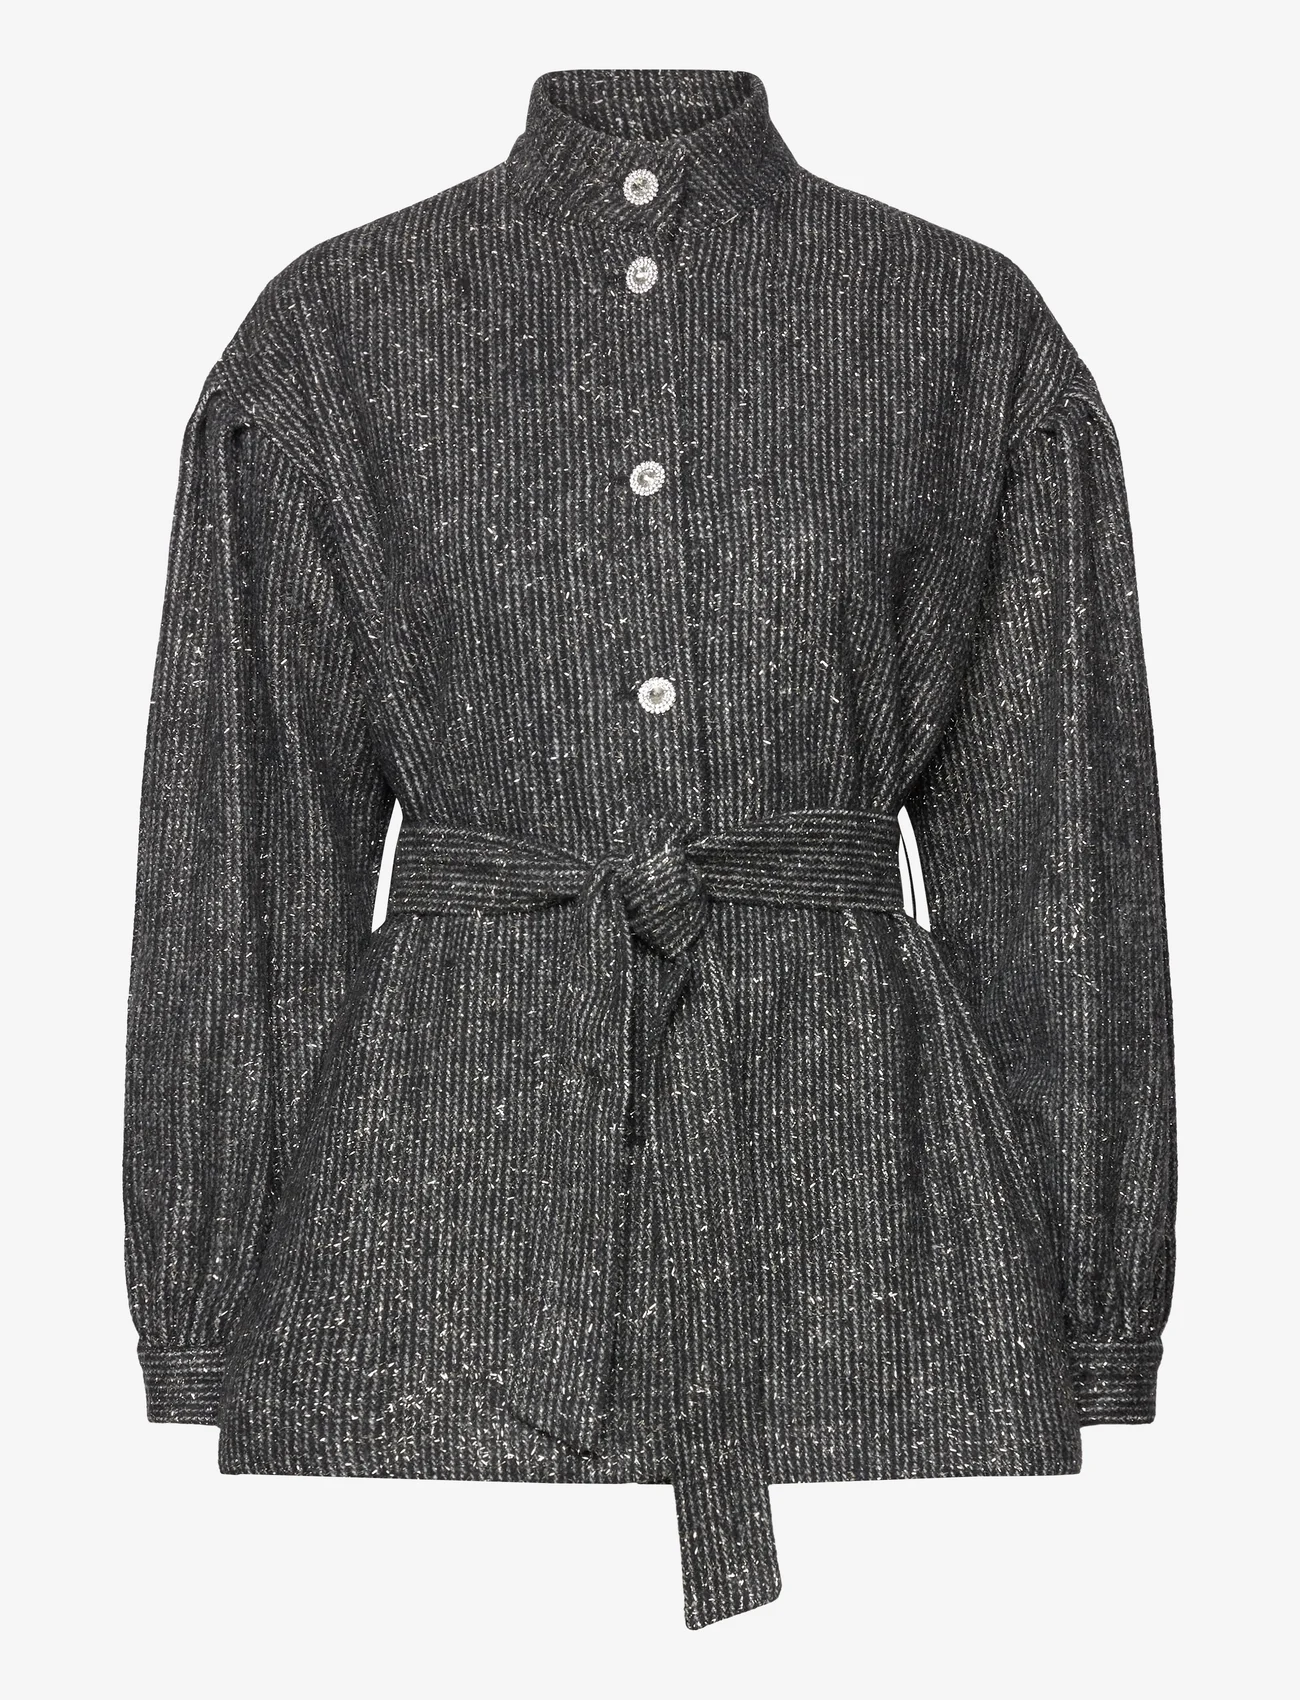 Bruuns Bazaar - BergeniaBBMaddi jacket - winterjassen - black - 0